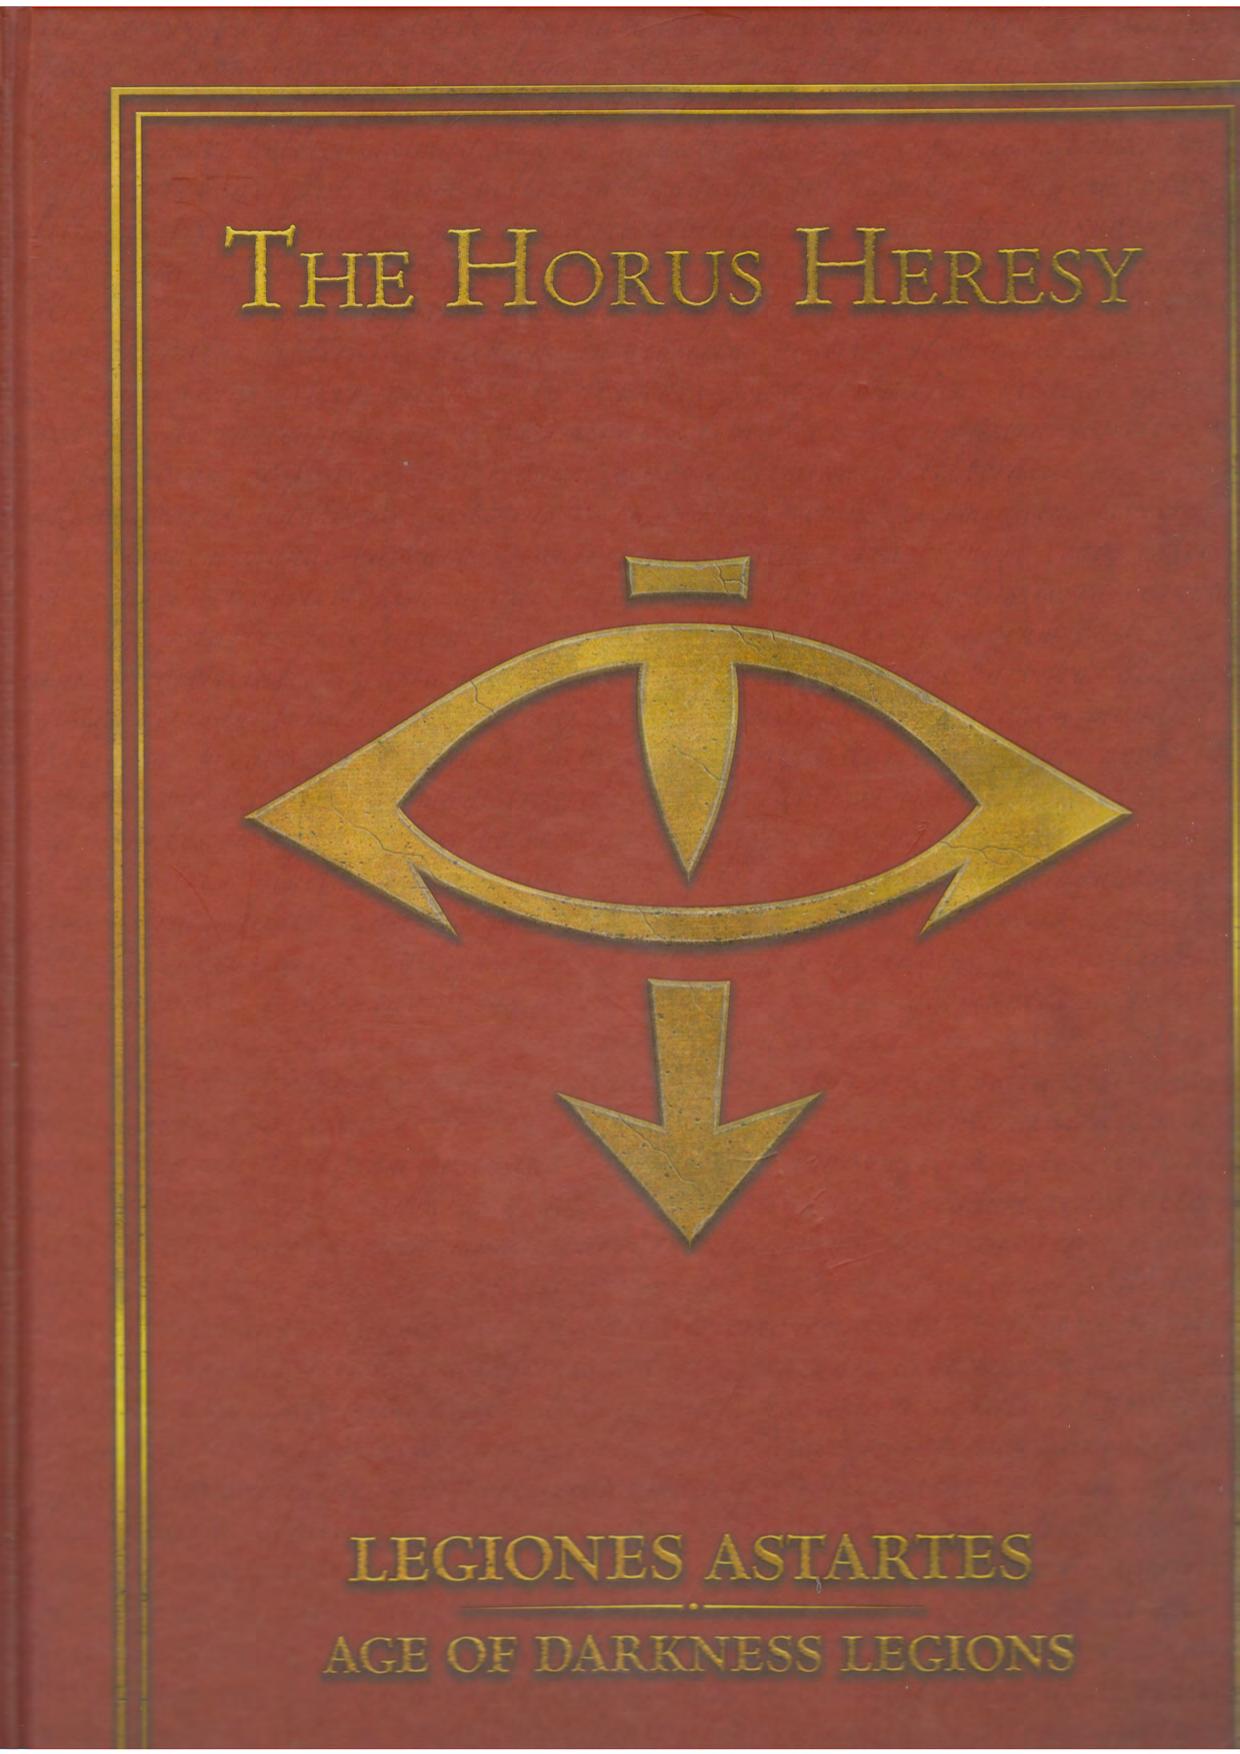 The Horus Heresy Legiones Astartes Age of Darkness Legions